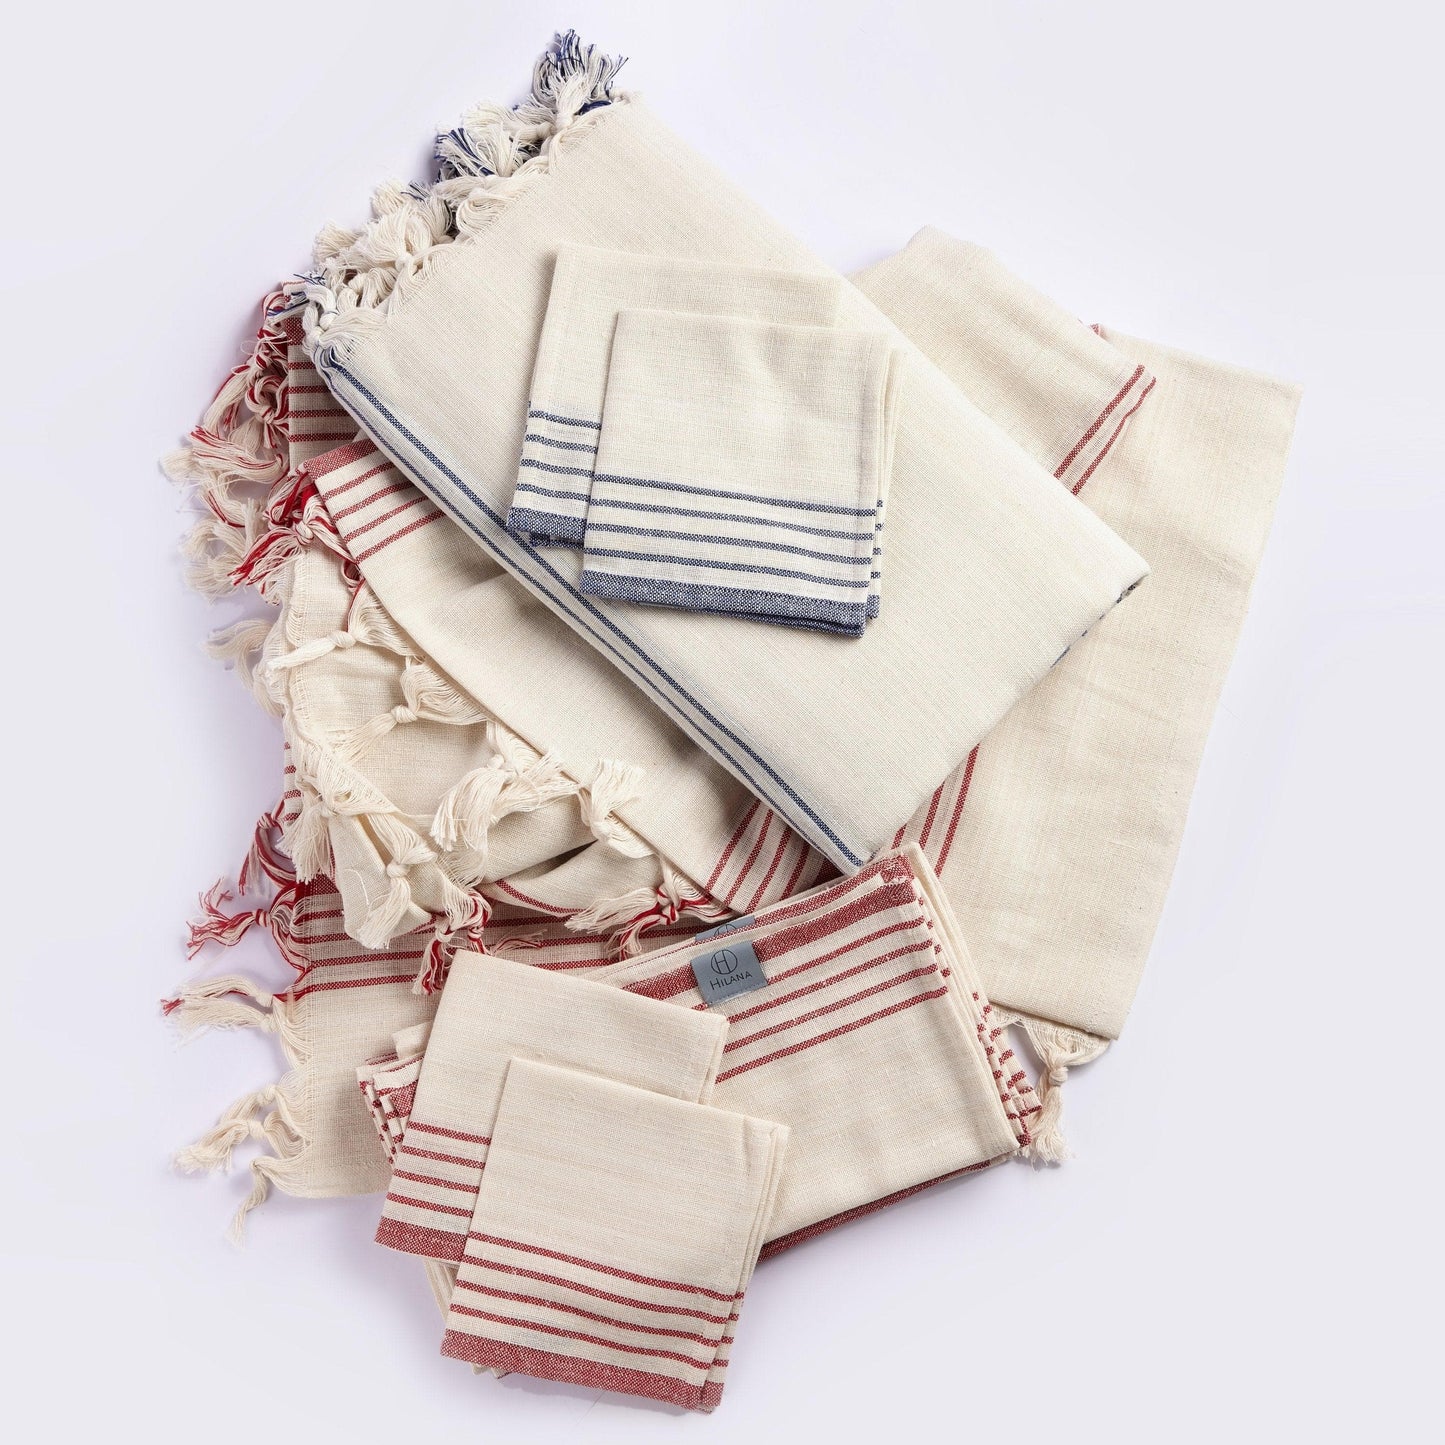 Kayseri Linen Tablecloth Set - Red - Premium Textiles & Pillows - Shop now at San Rocco Italia